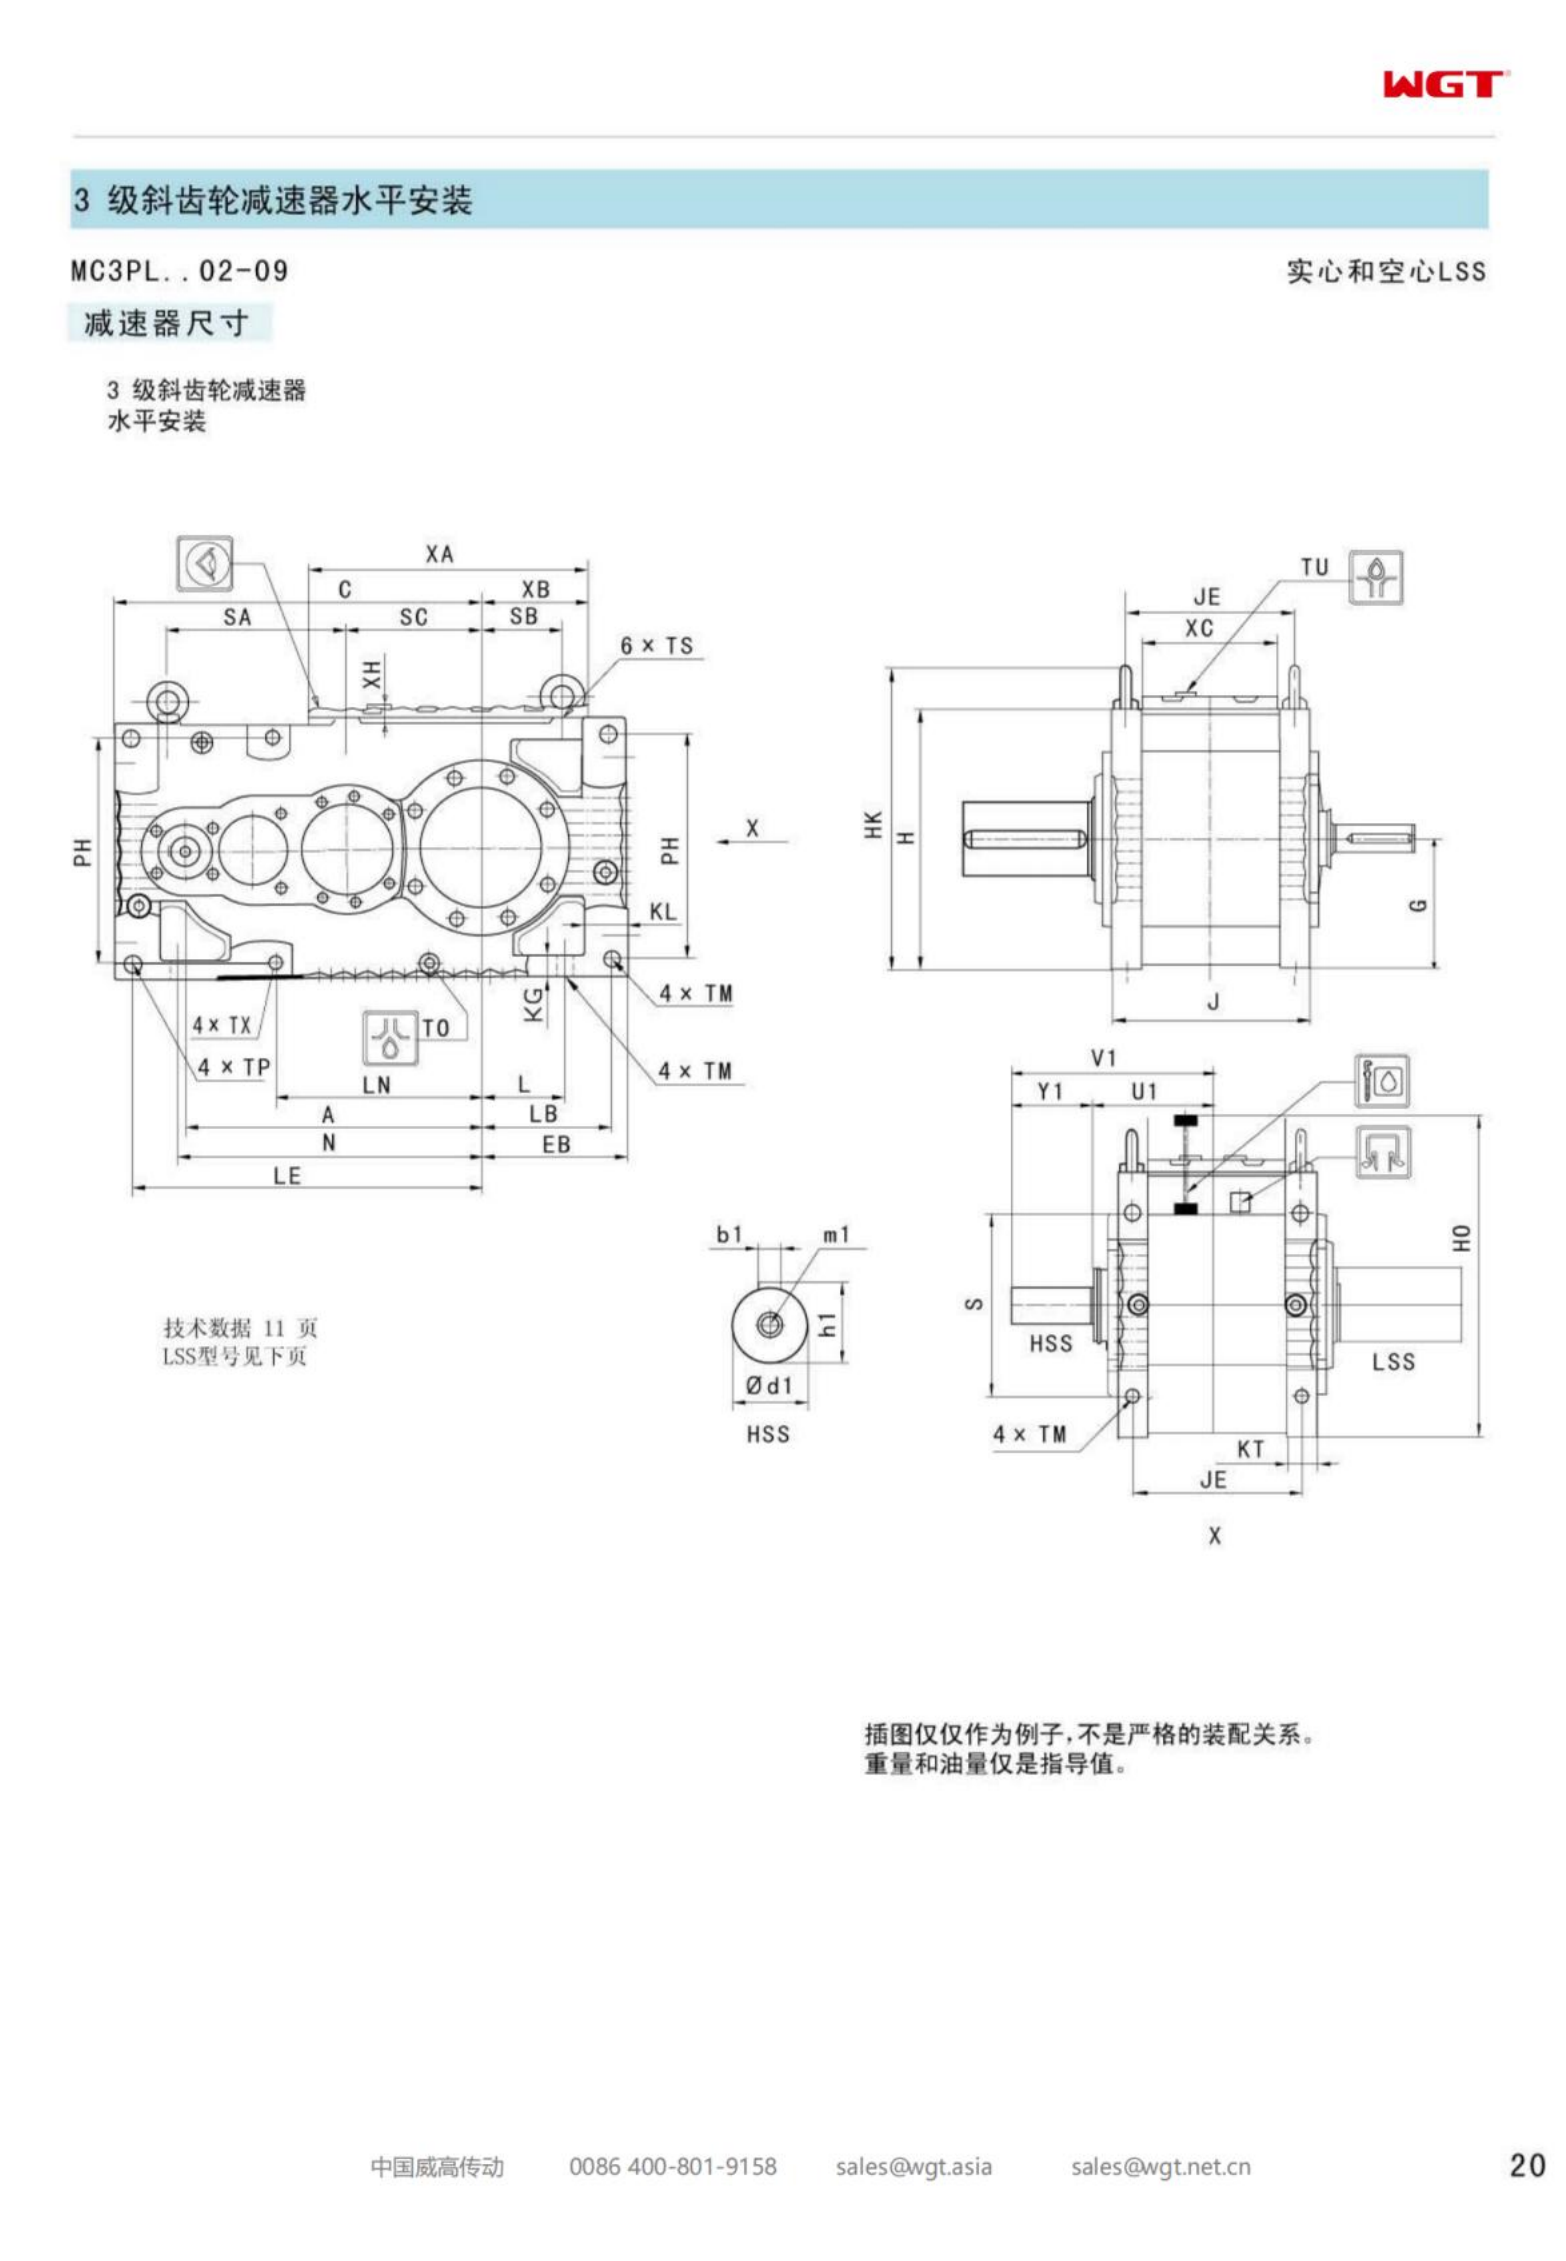 MC3PLSF09 replaces _SEW_MC_Series gearbox (patent)